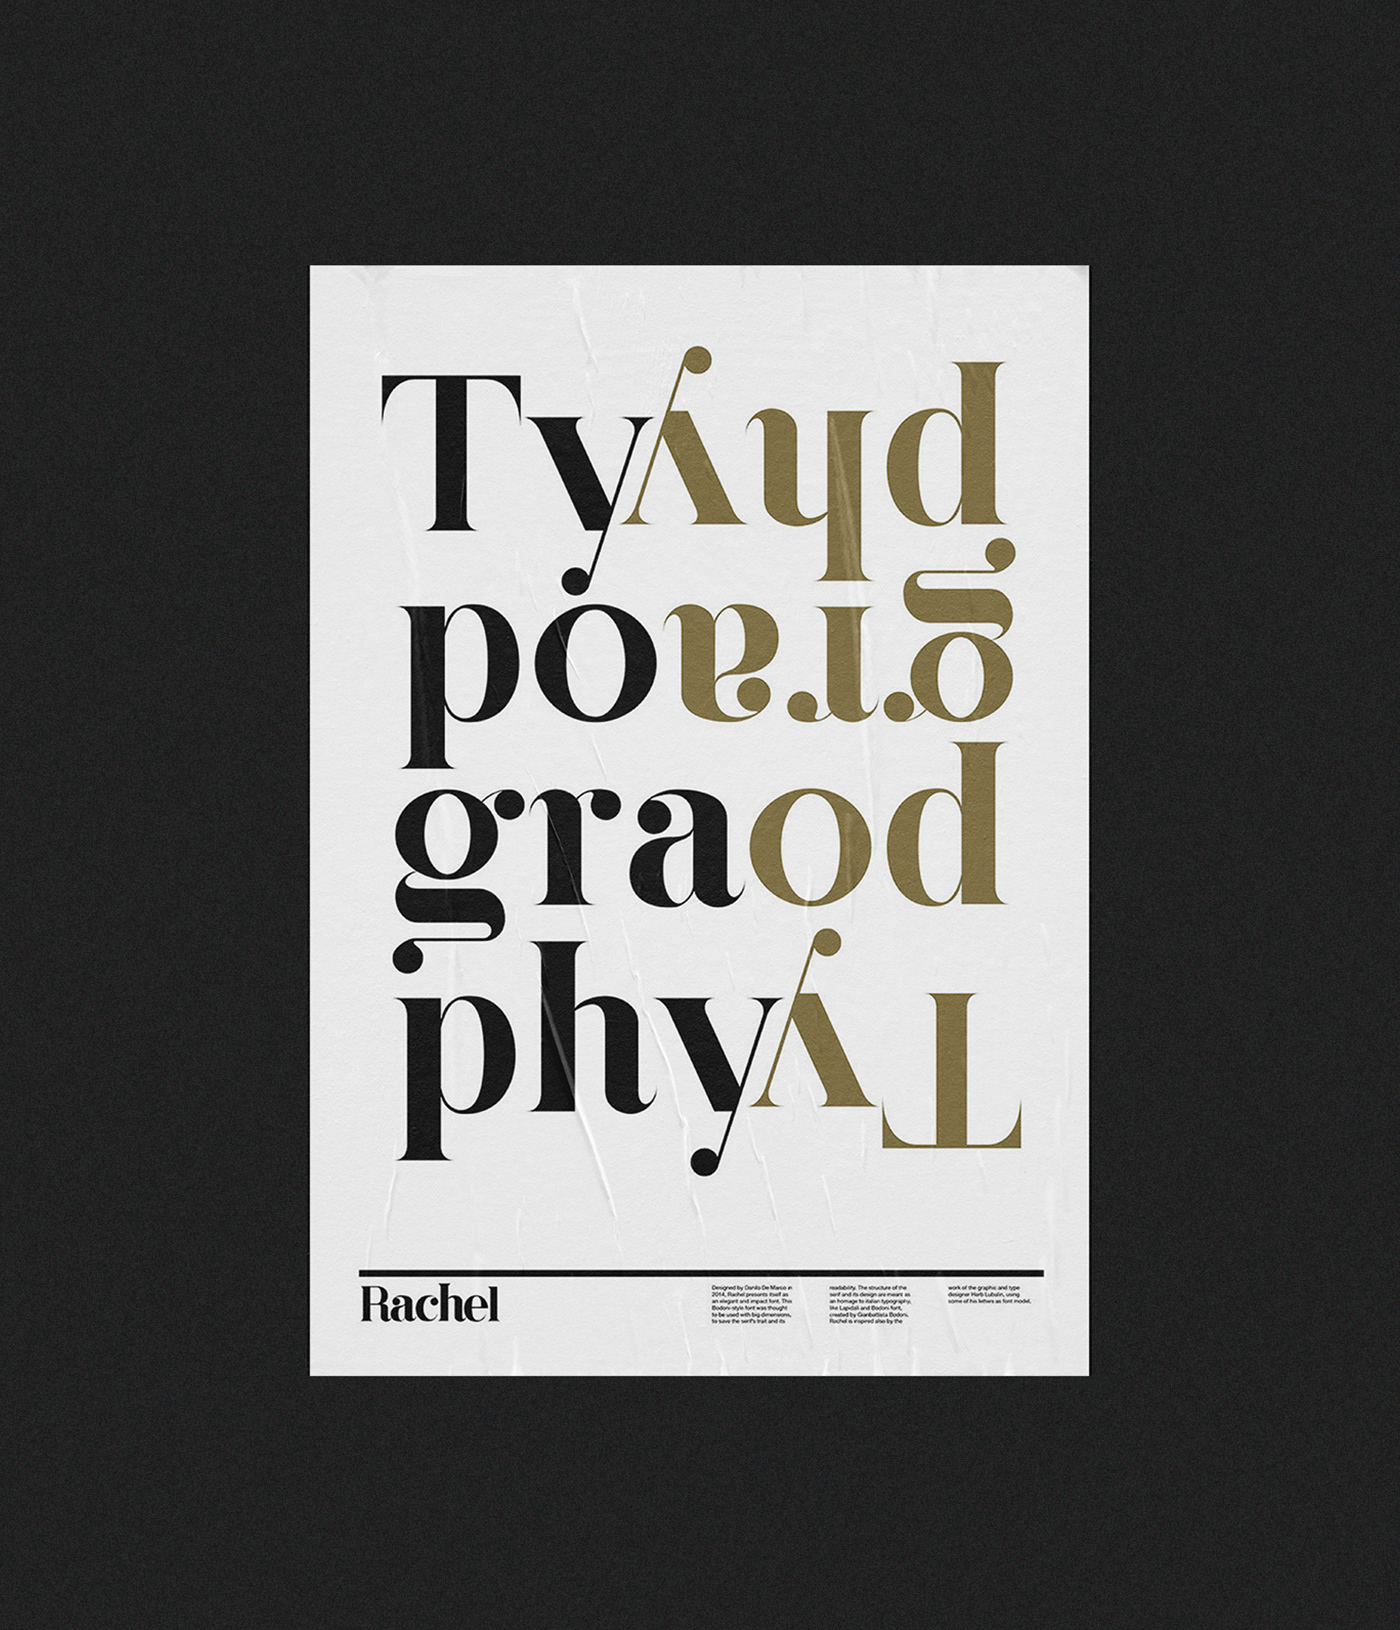 Rachel Free elegant typeface - serif